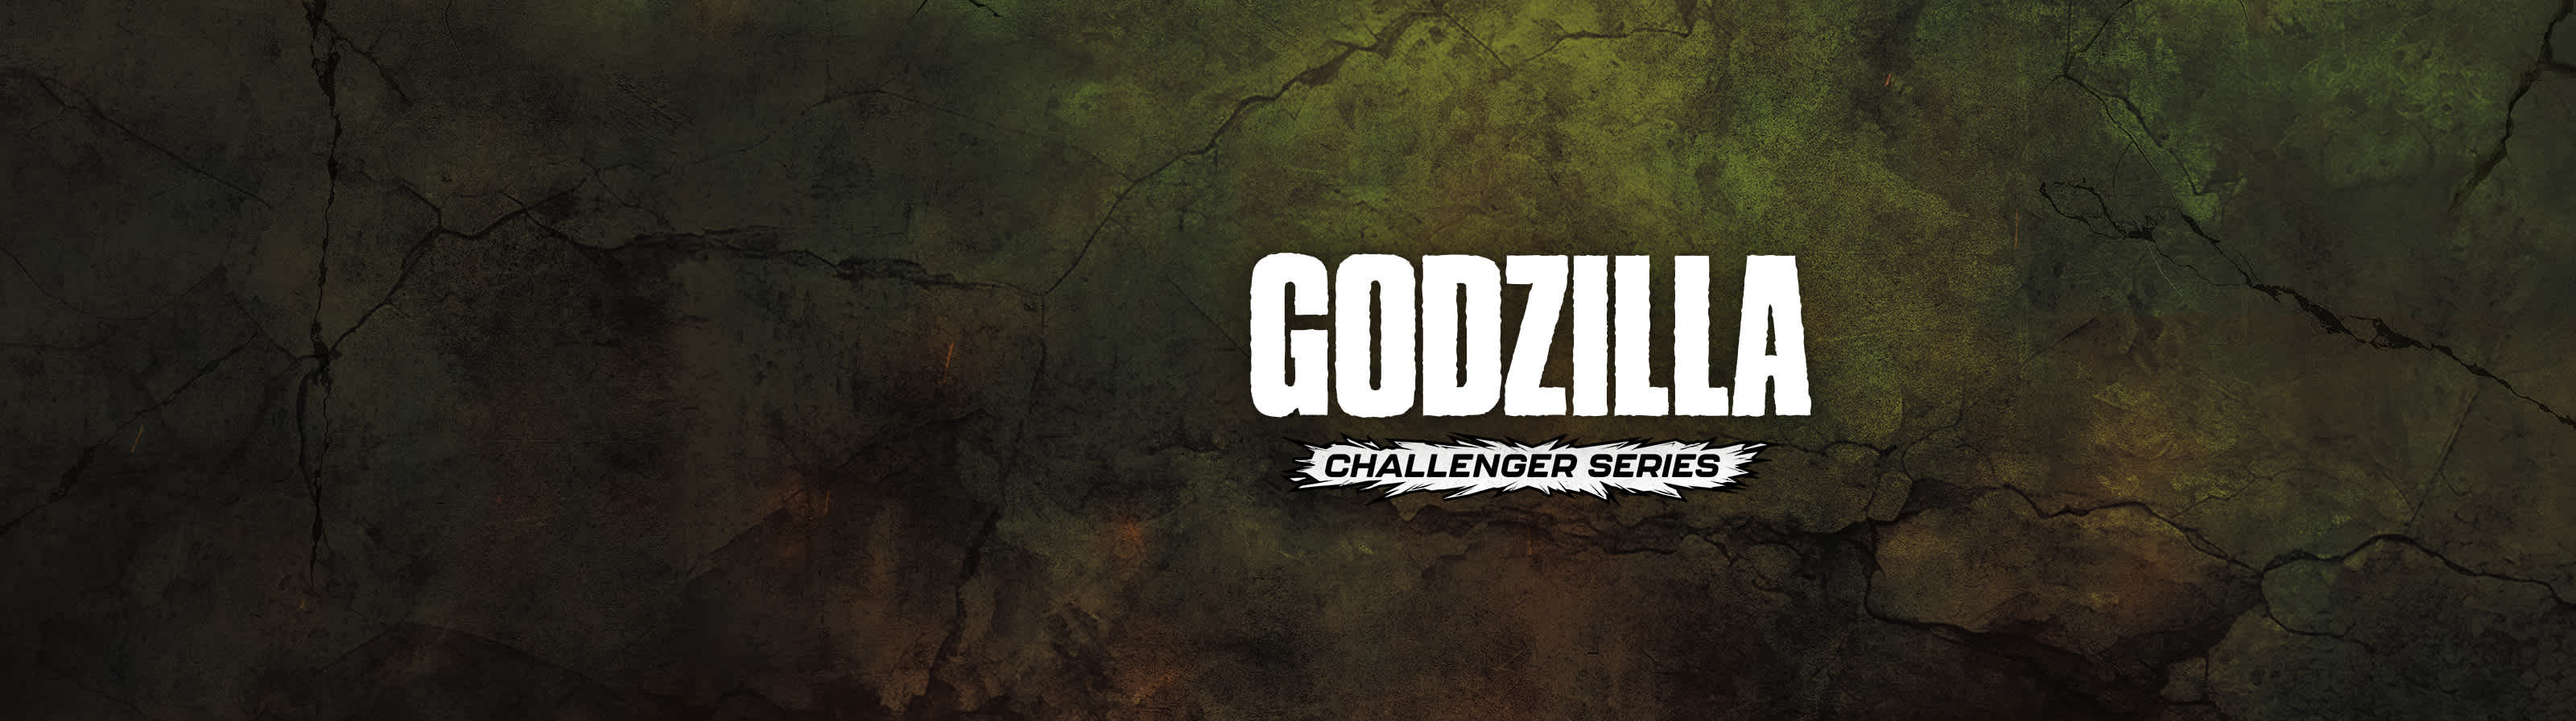 GodzillaCS-GameDesignArticle-ArticleFeatured-Desktop@2x